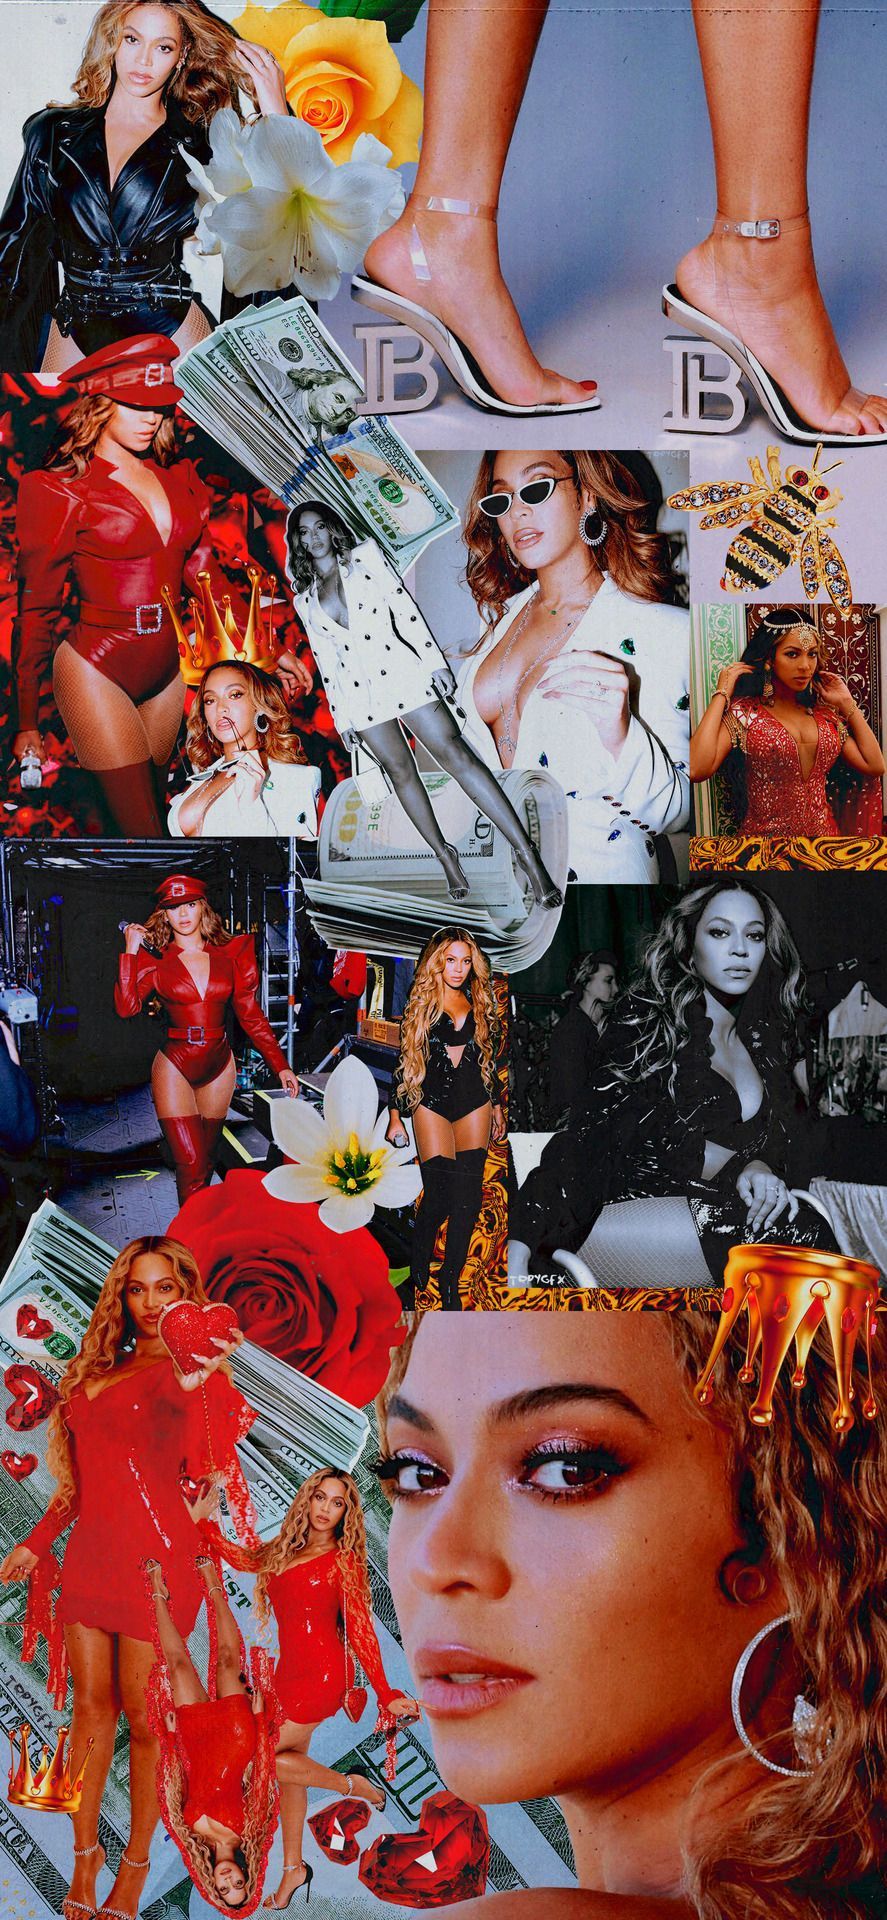 Beyoncé wallpaper. Beyonce wall art, Beyonce background, Queen bee beyonce